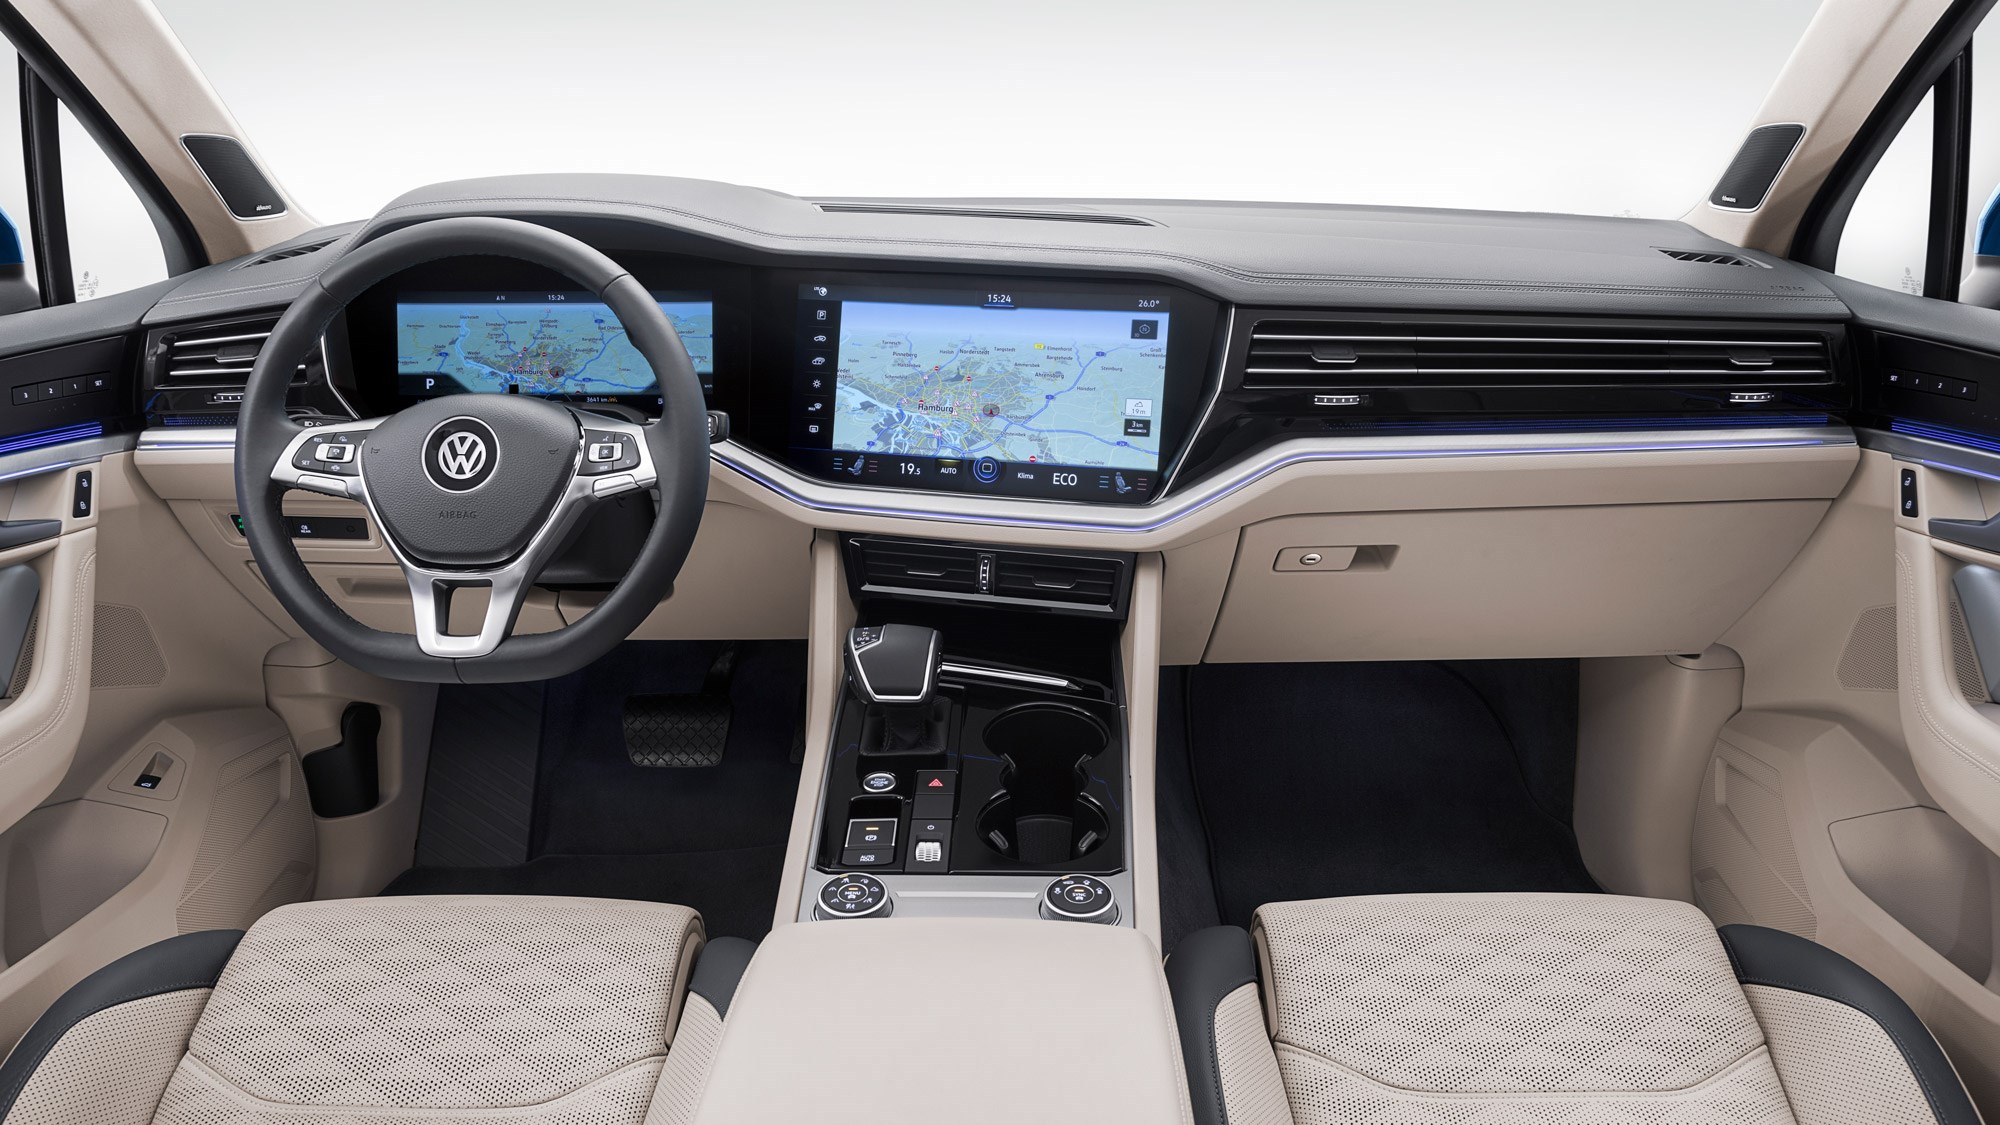 New VW Touareg: techy flagship SUV revealed in Beijing